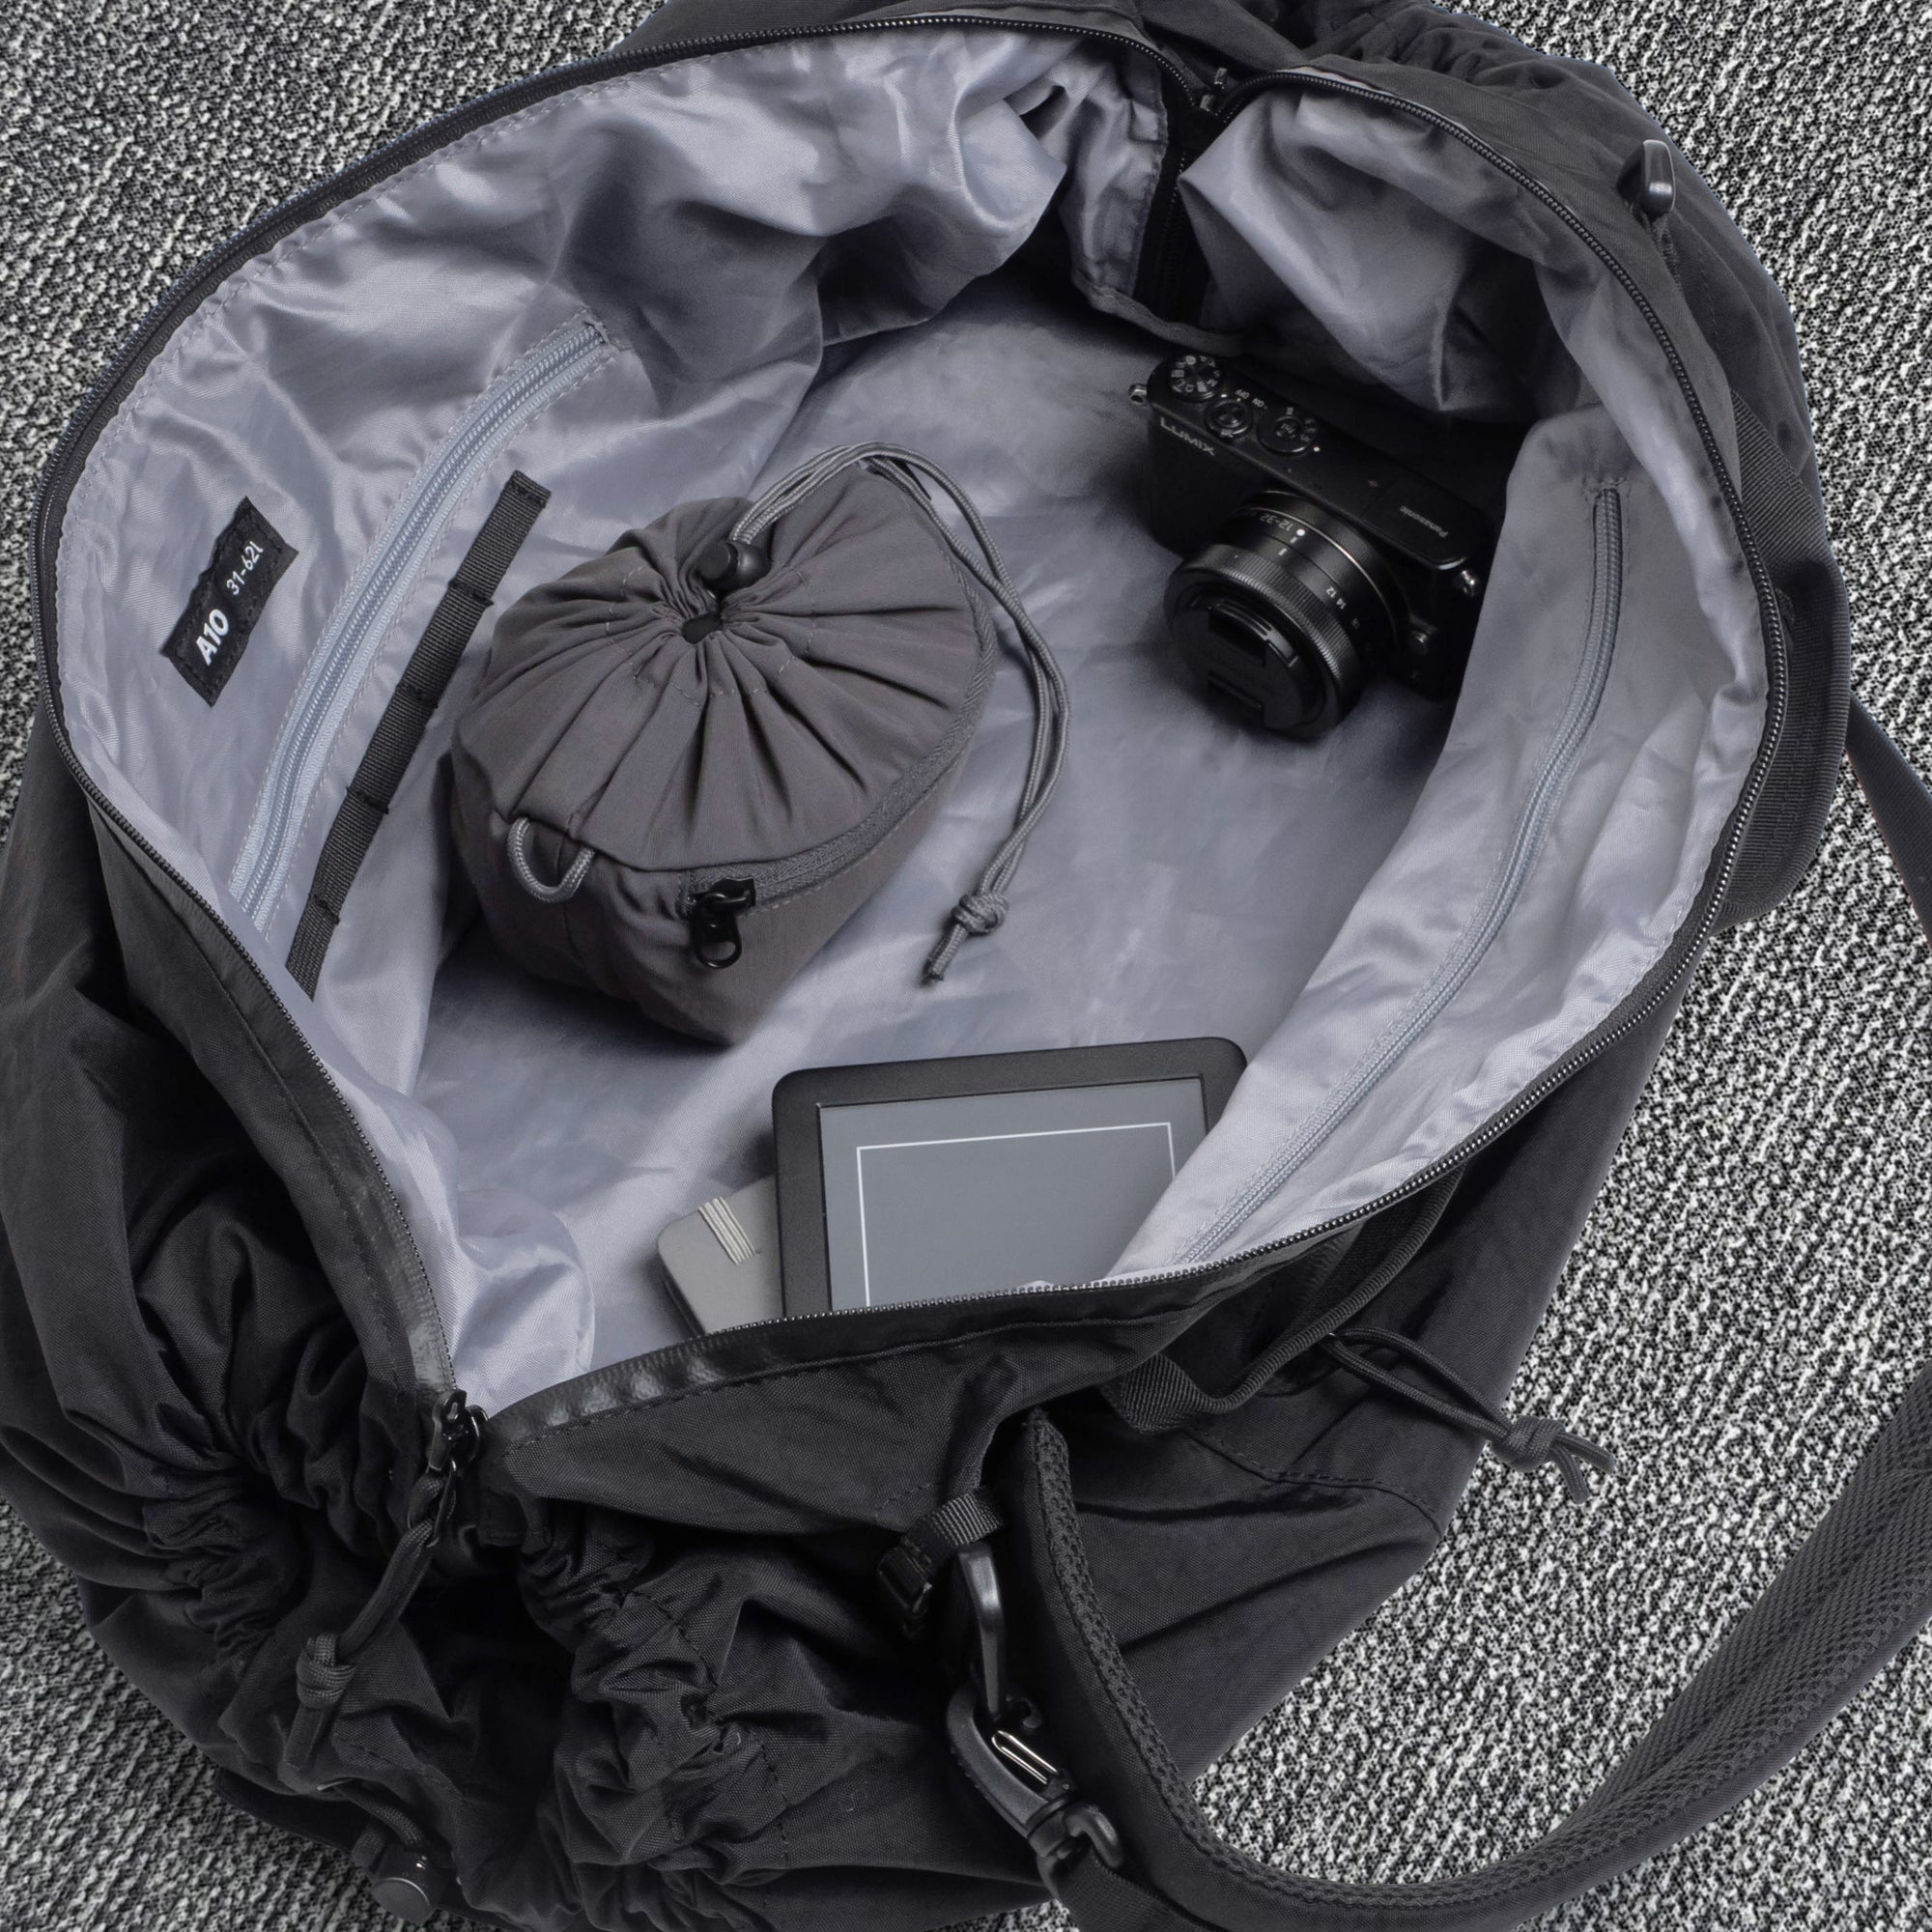 Adjustable Bag - A10